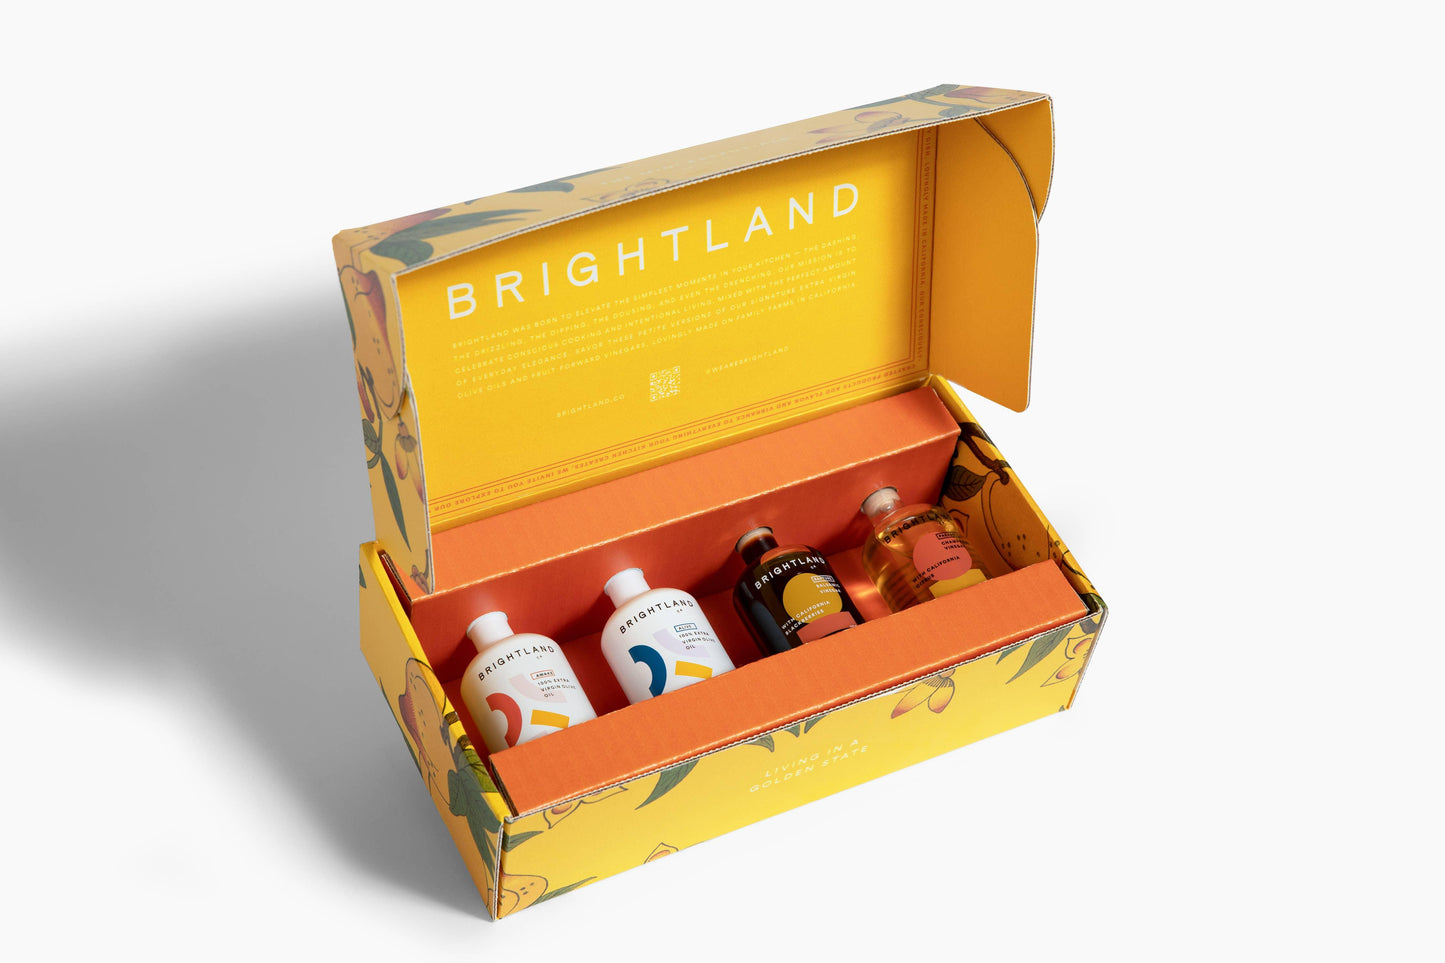 The Mini Essentials Olive Oil Gift Set by Brightland